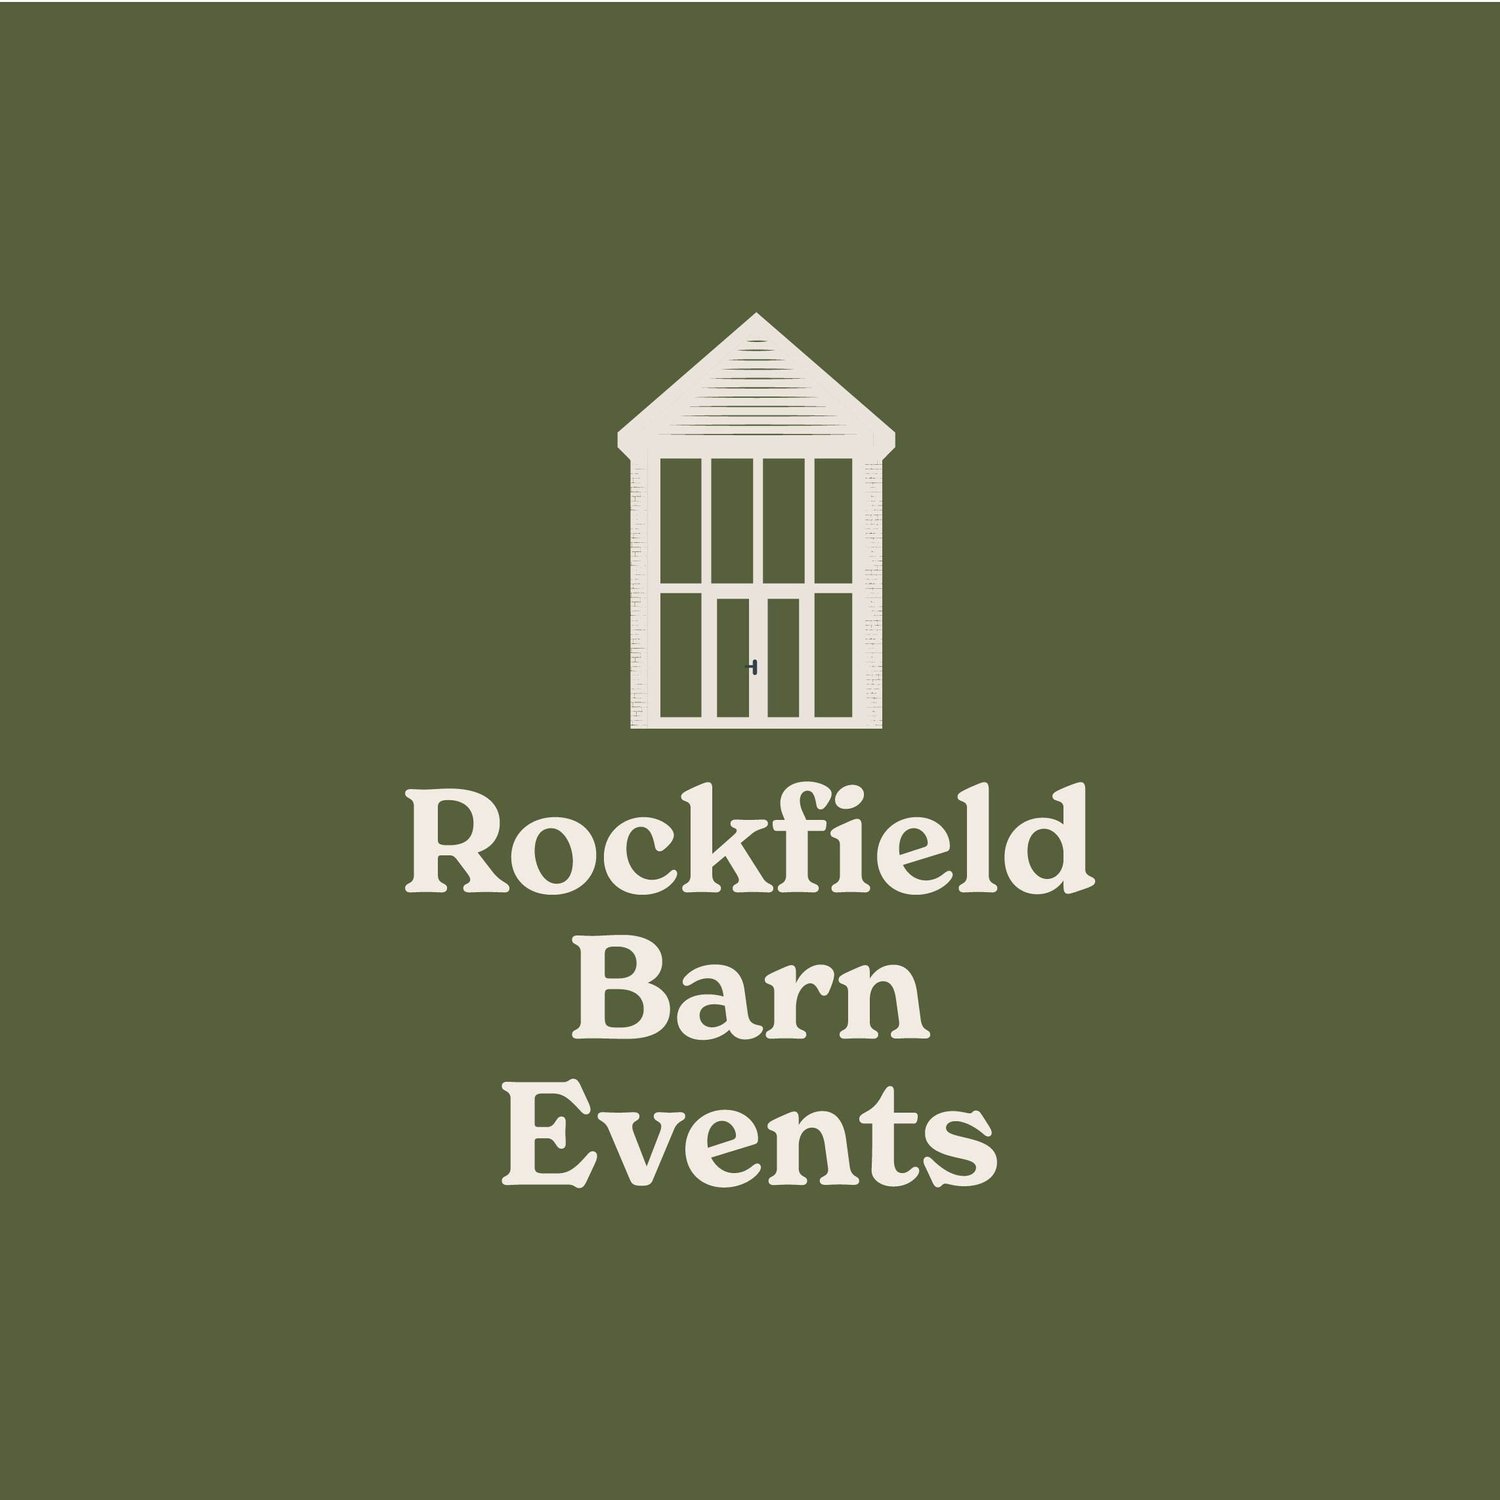 Rockfield Barn